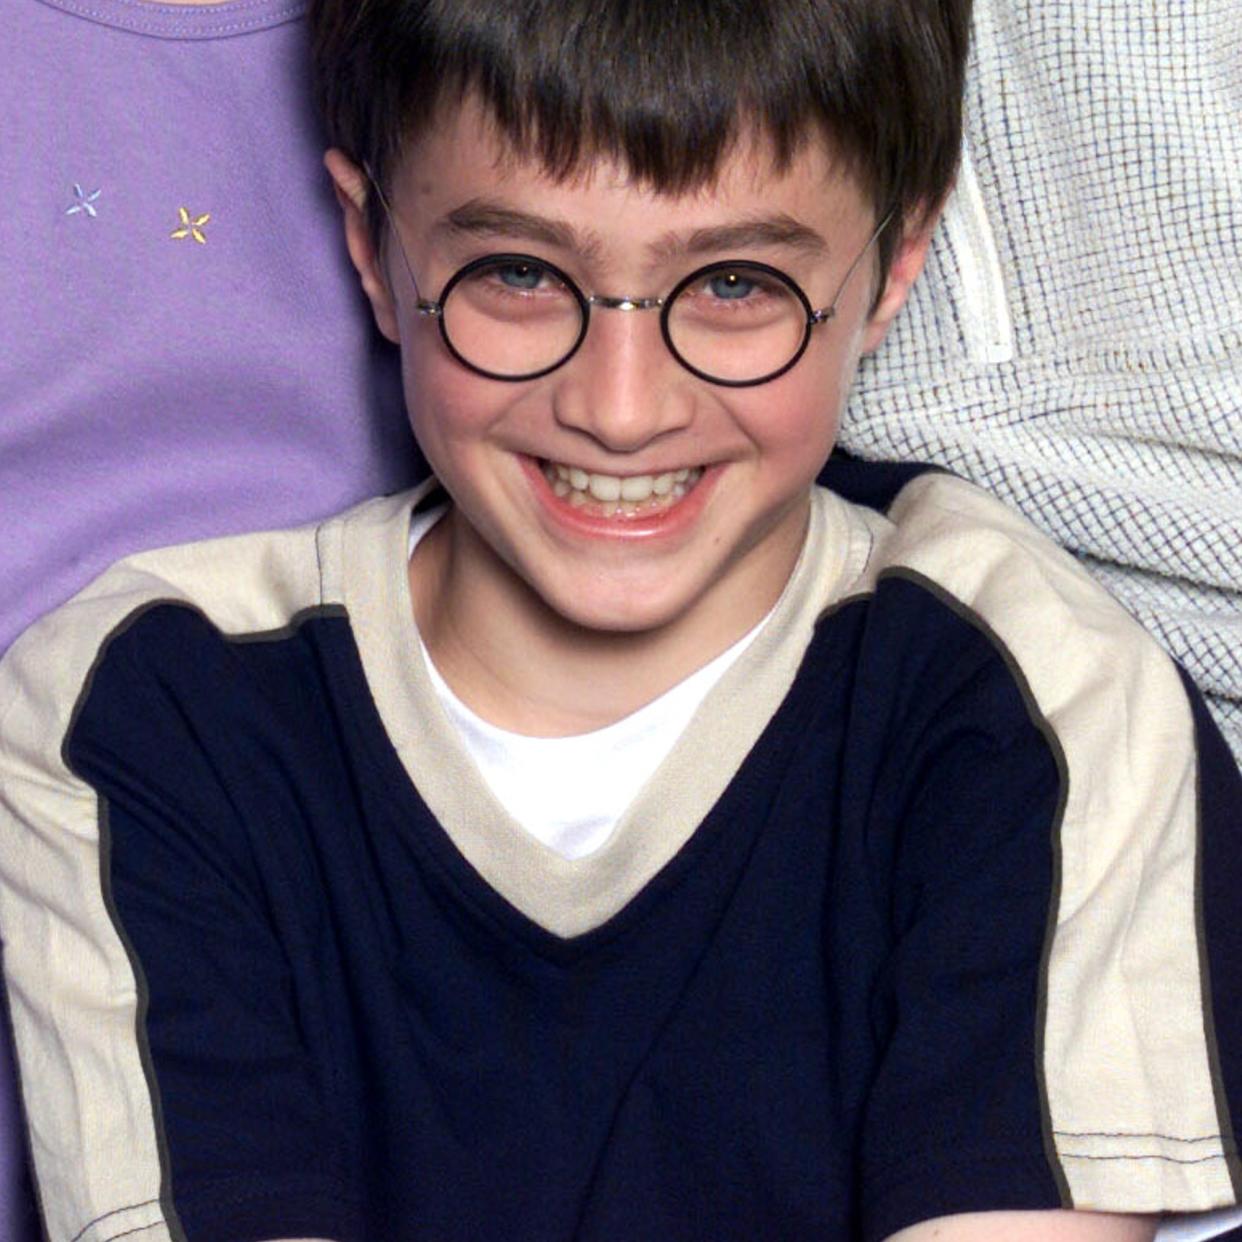  Daniel Radcliffe as Harry Potter 